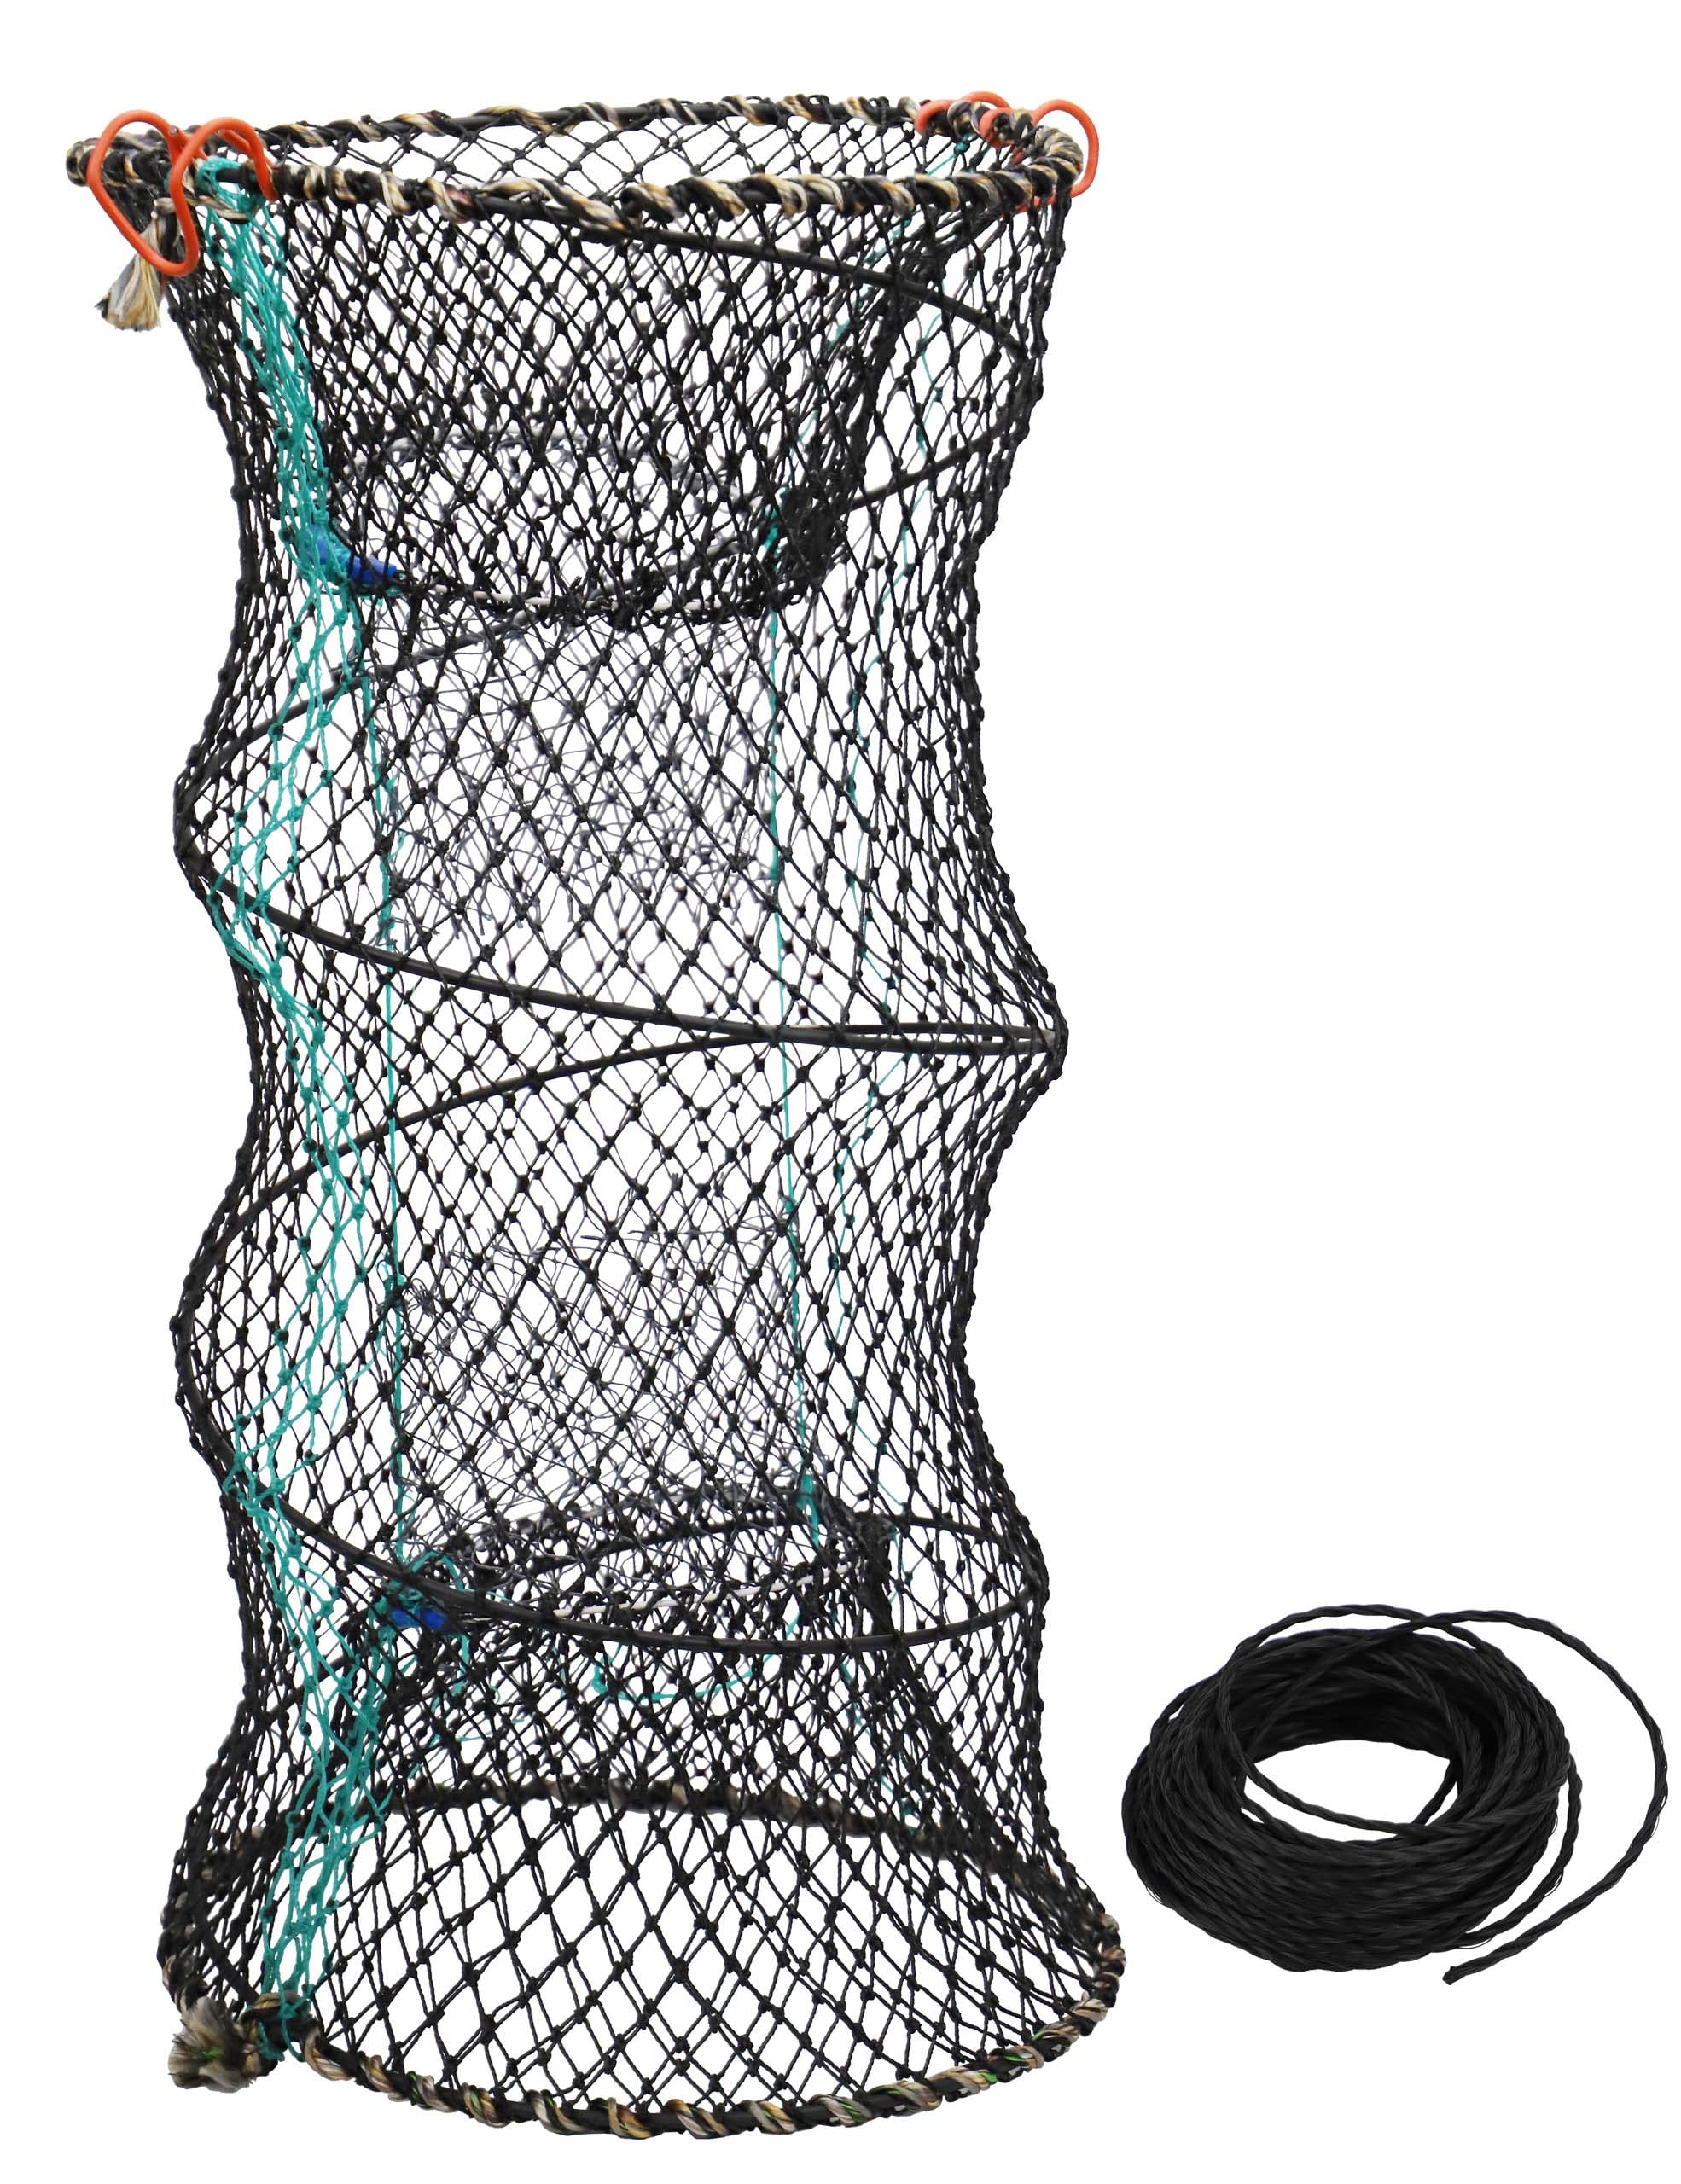 Ducurt Crab Trap Minnow Trap, 2PCS Crawfish Fish Trap for Bait Fish, Folded  Crawdad Crayfish Traps 2 PCS Bait Traps